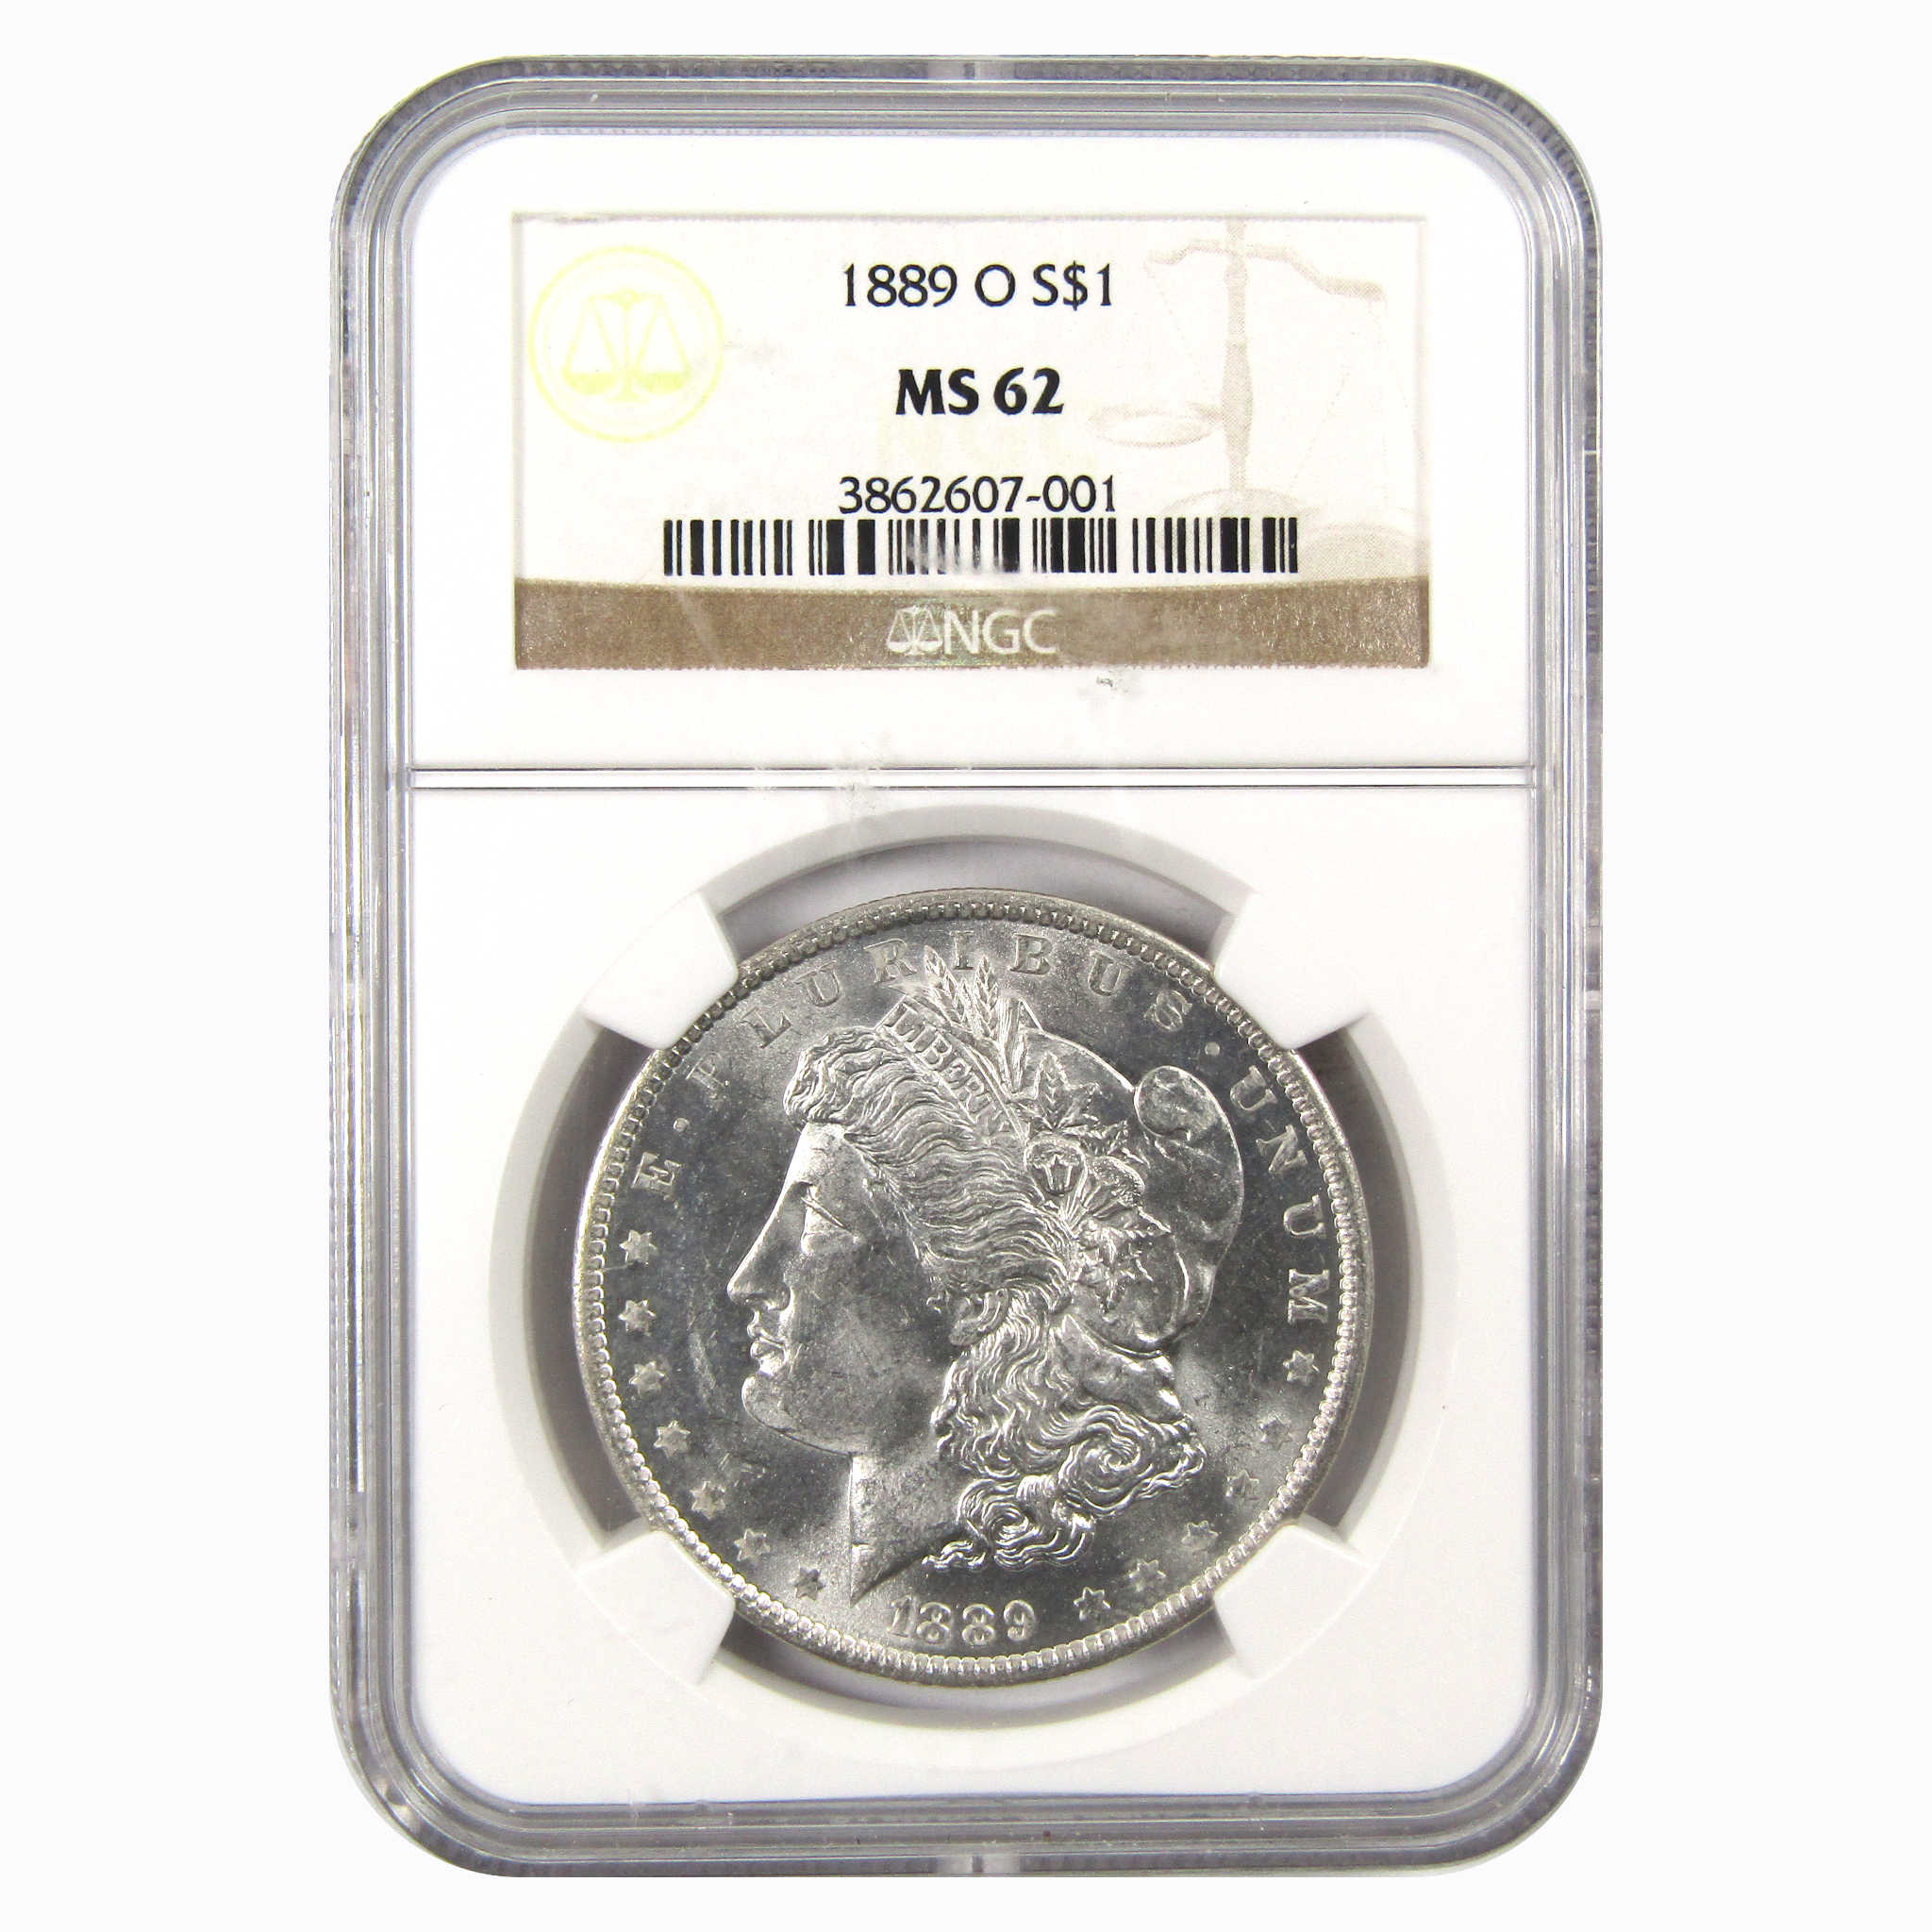 1889 O Morgan Dollar MS 62 NGC 90% Silver Uncirculated Coin SKU:I9838 - Morgan coin - Morgan silver dollar - Morgan silver dollar for sale - Profile Coins &amp; Collectibles